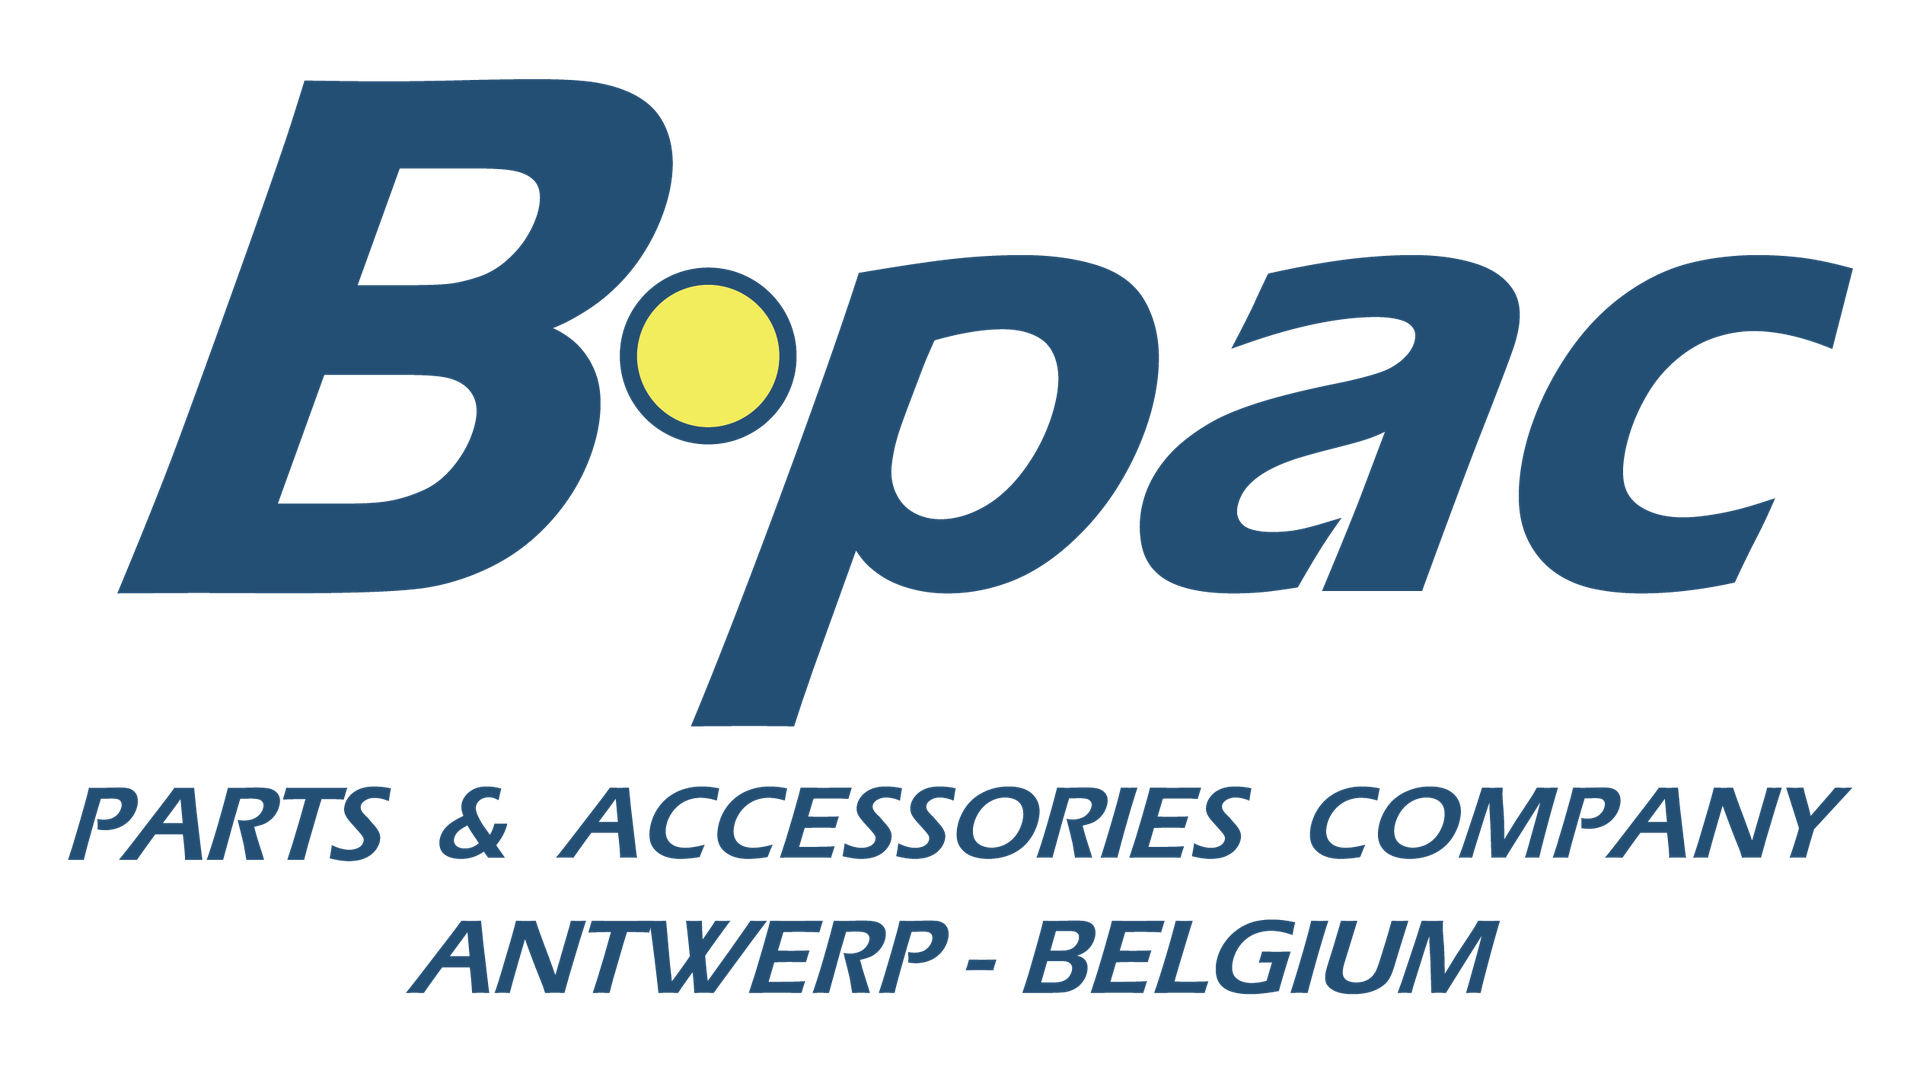 Belgium Parts & Accessories Company